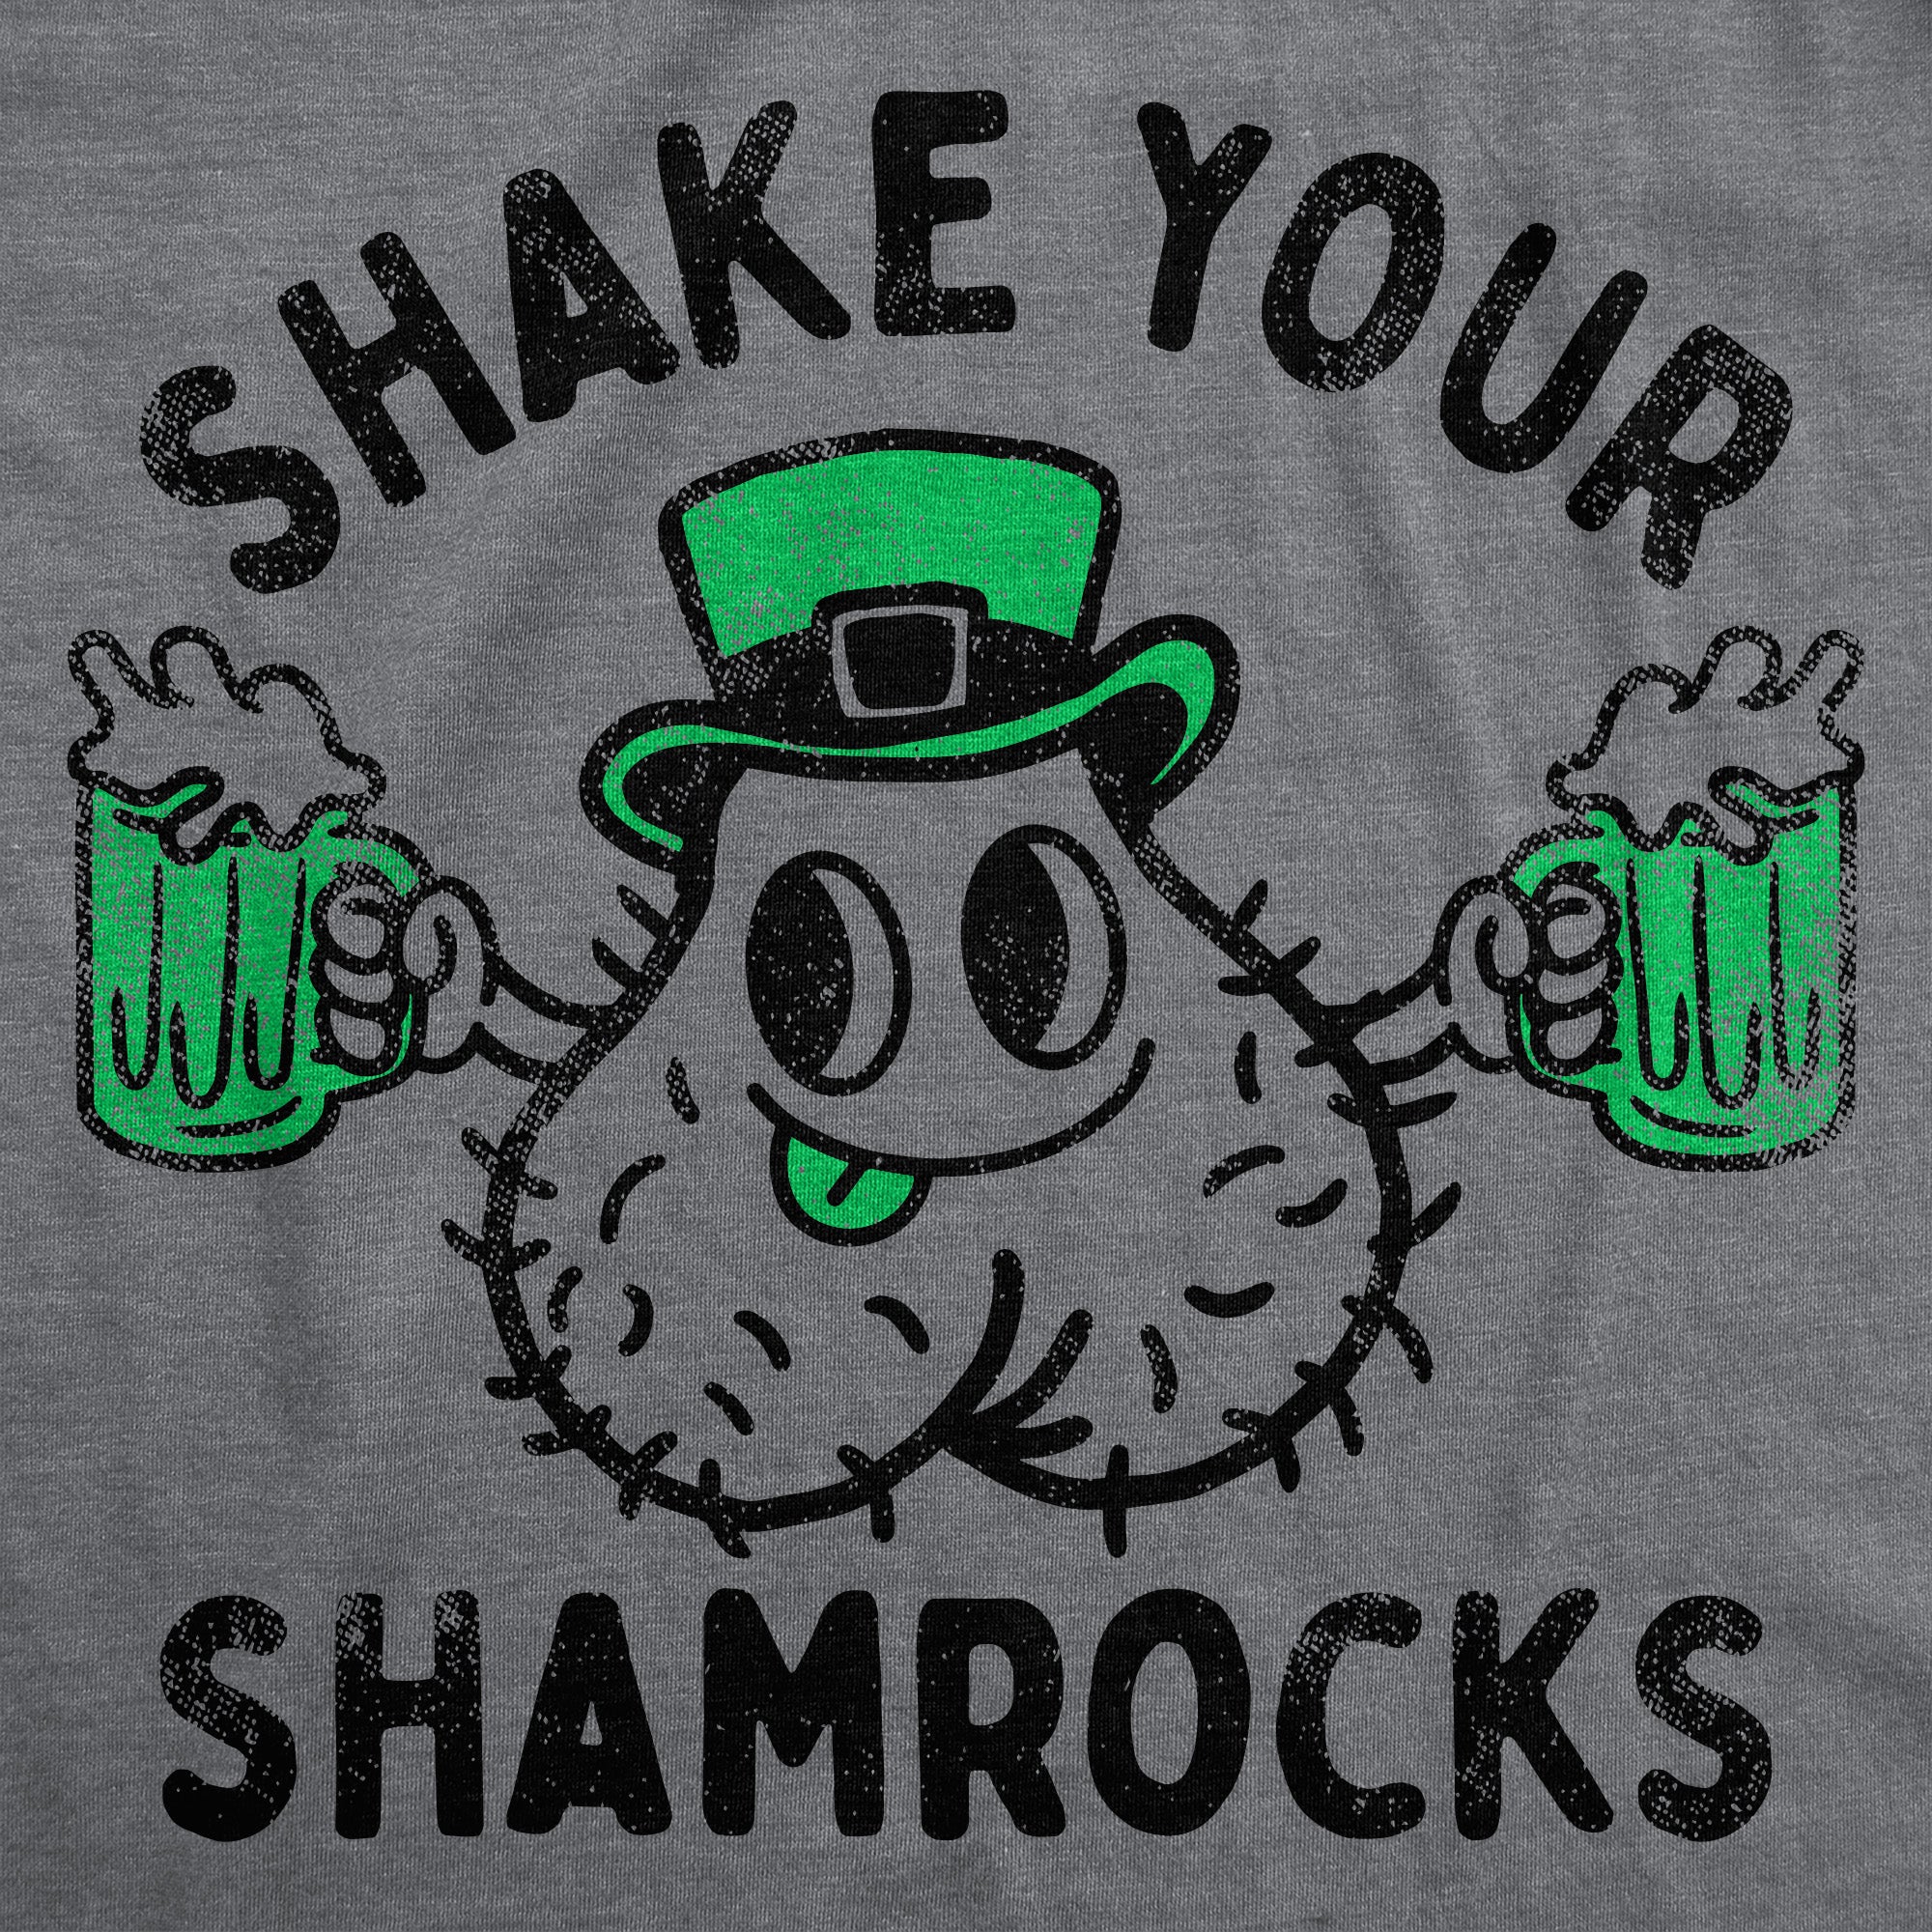 Funny Dark Heather Grey - Shake Your Shamrocks Shake Your Shamrocks Mens T Shirt Nerdy Saint Patrick's Day sarcastic Tee